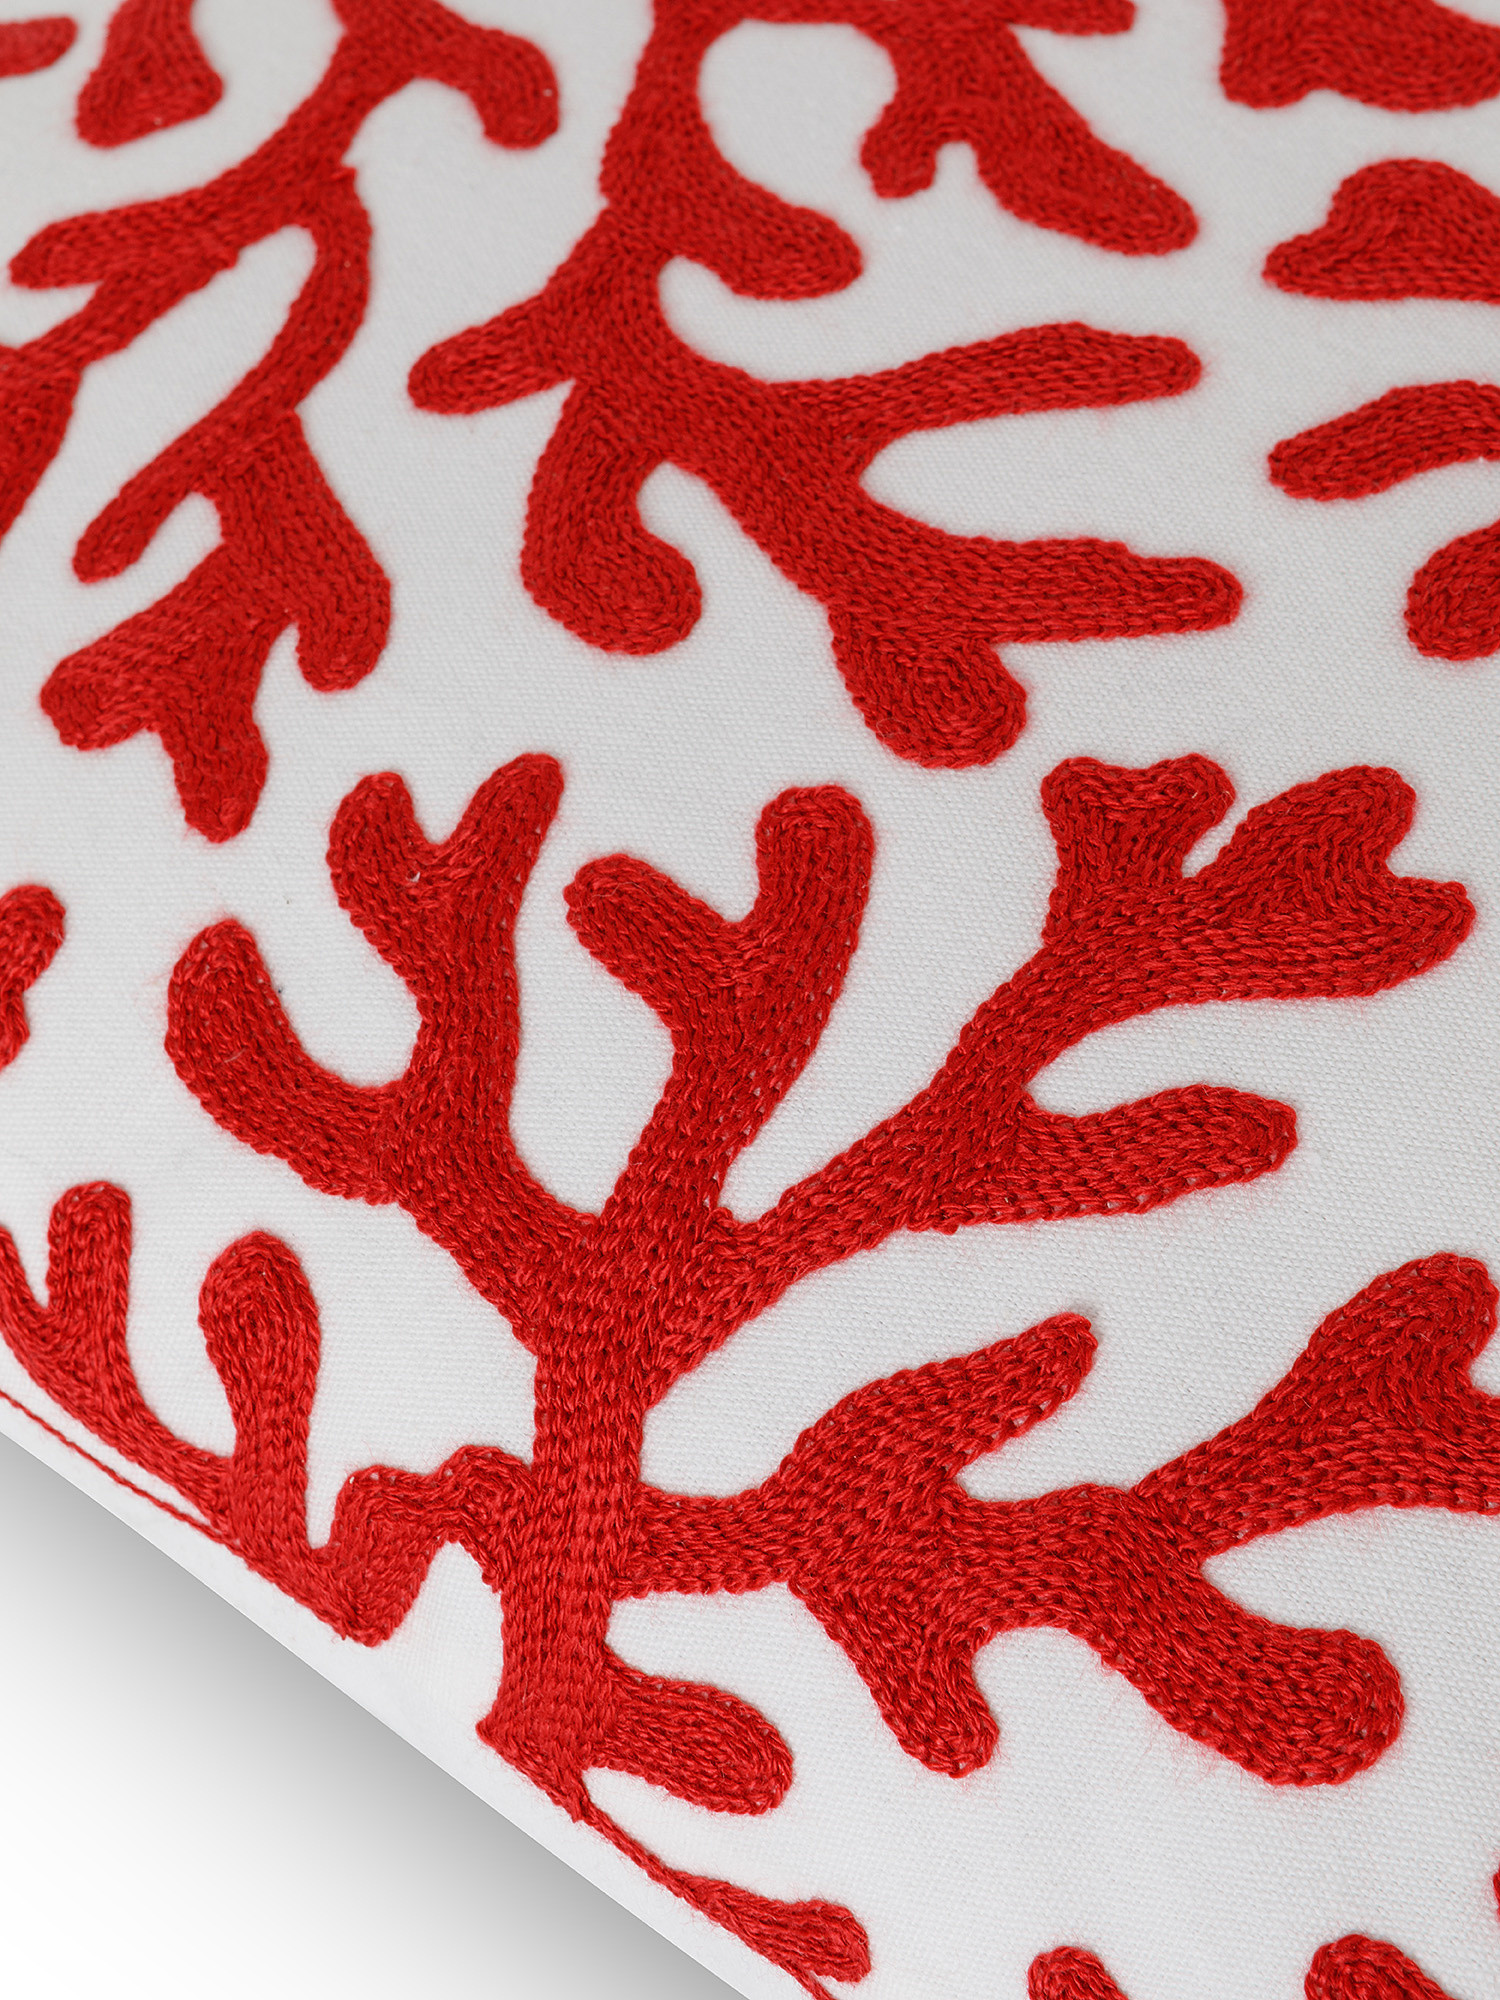 Cuscino ricamo coralli 45x45cm, Rosso, large image number 1